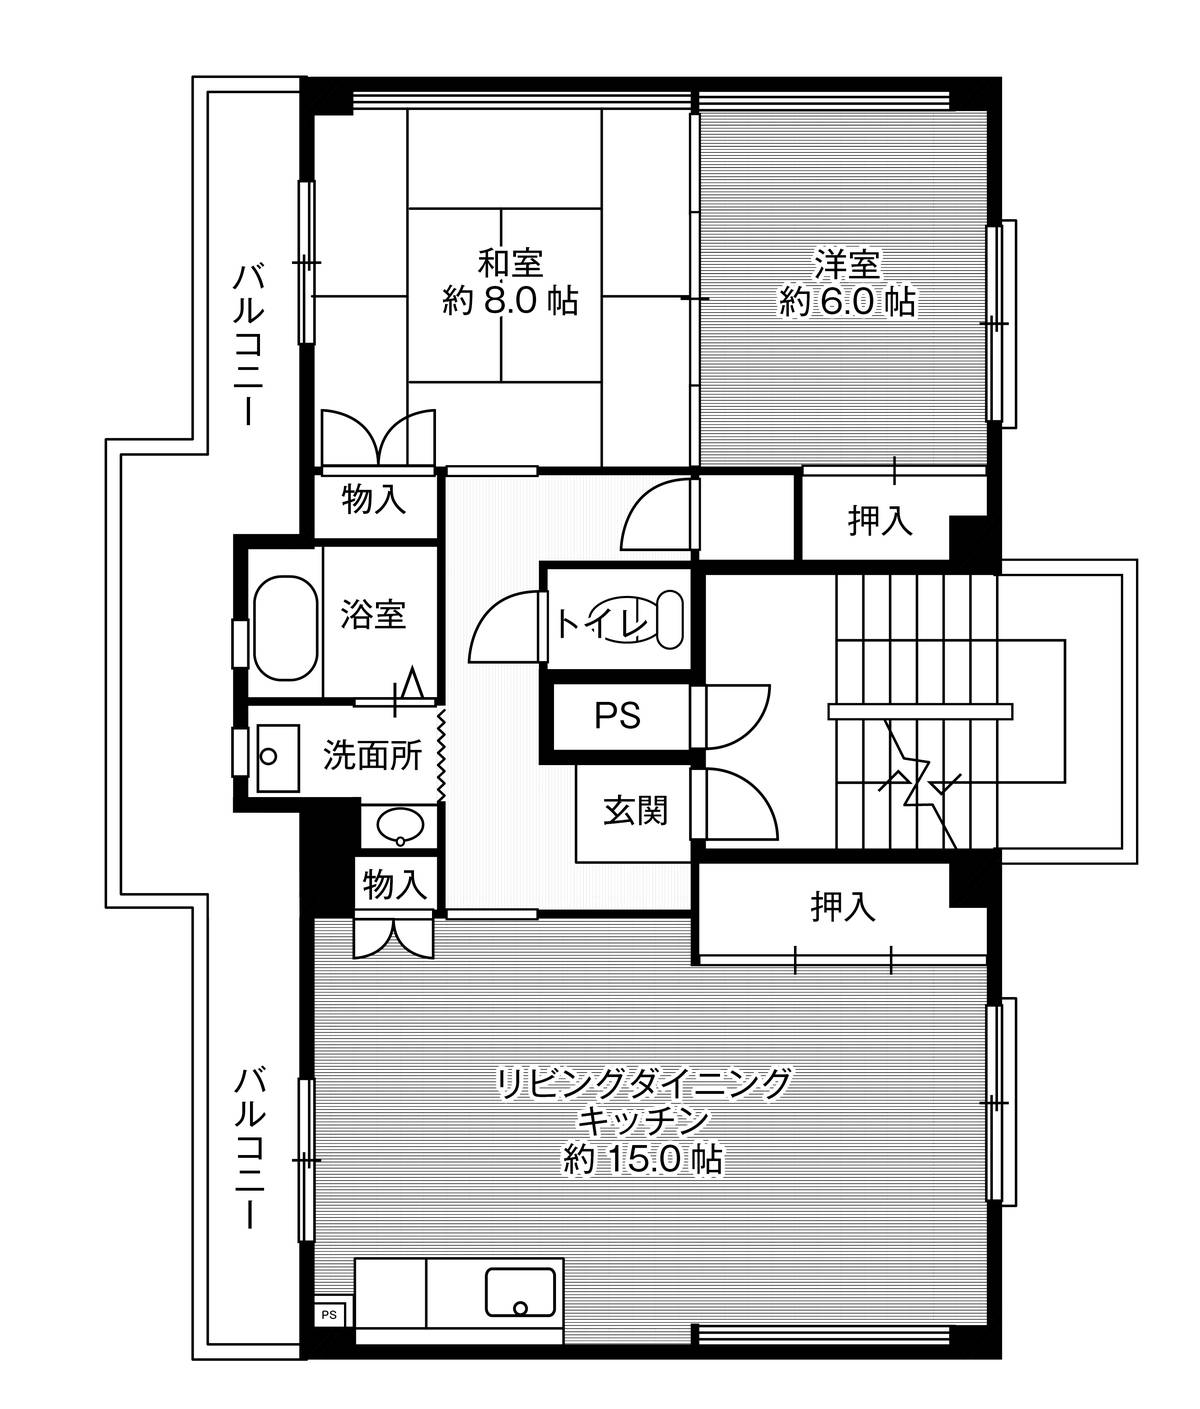 2LDK floorplan of Village House Ishinomaki in Toyohashi-shi